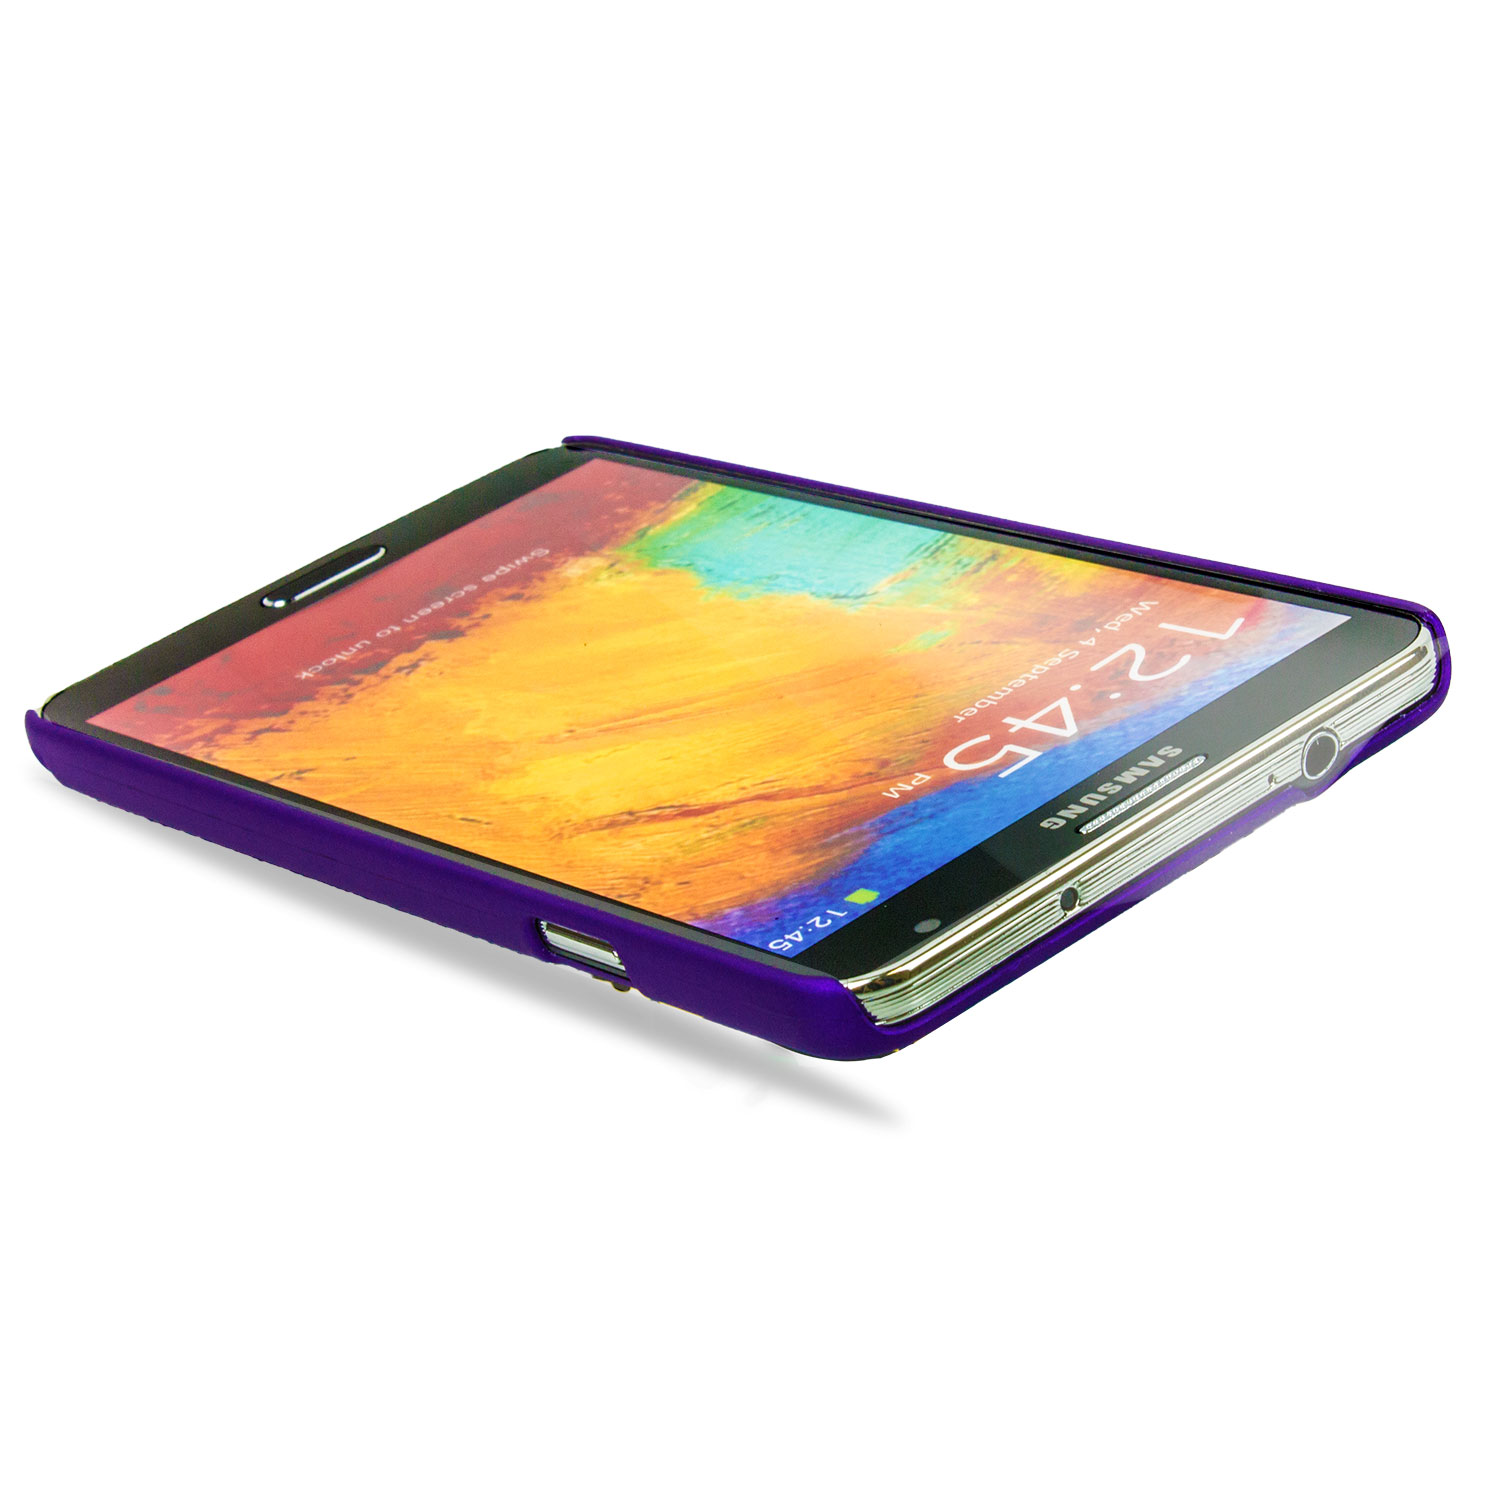 ToughGuard Shell for Samsung Galaxy Note 3 - Purple